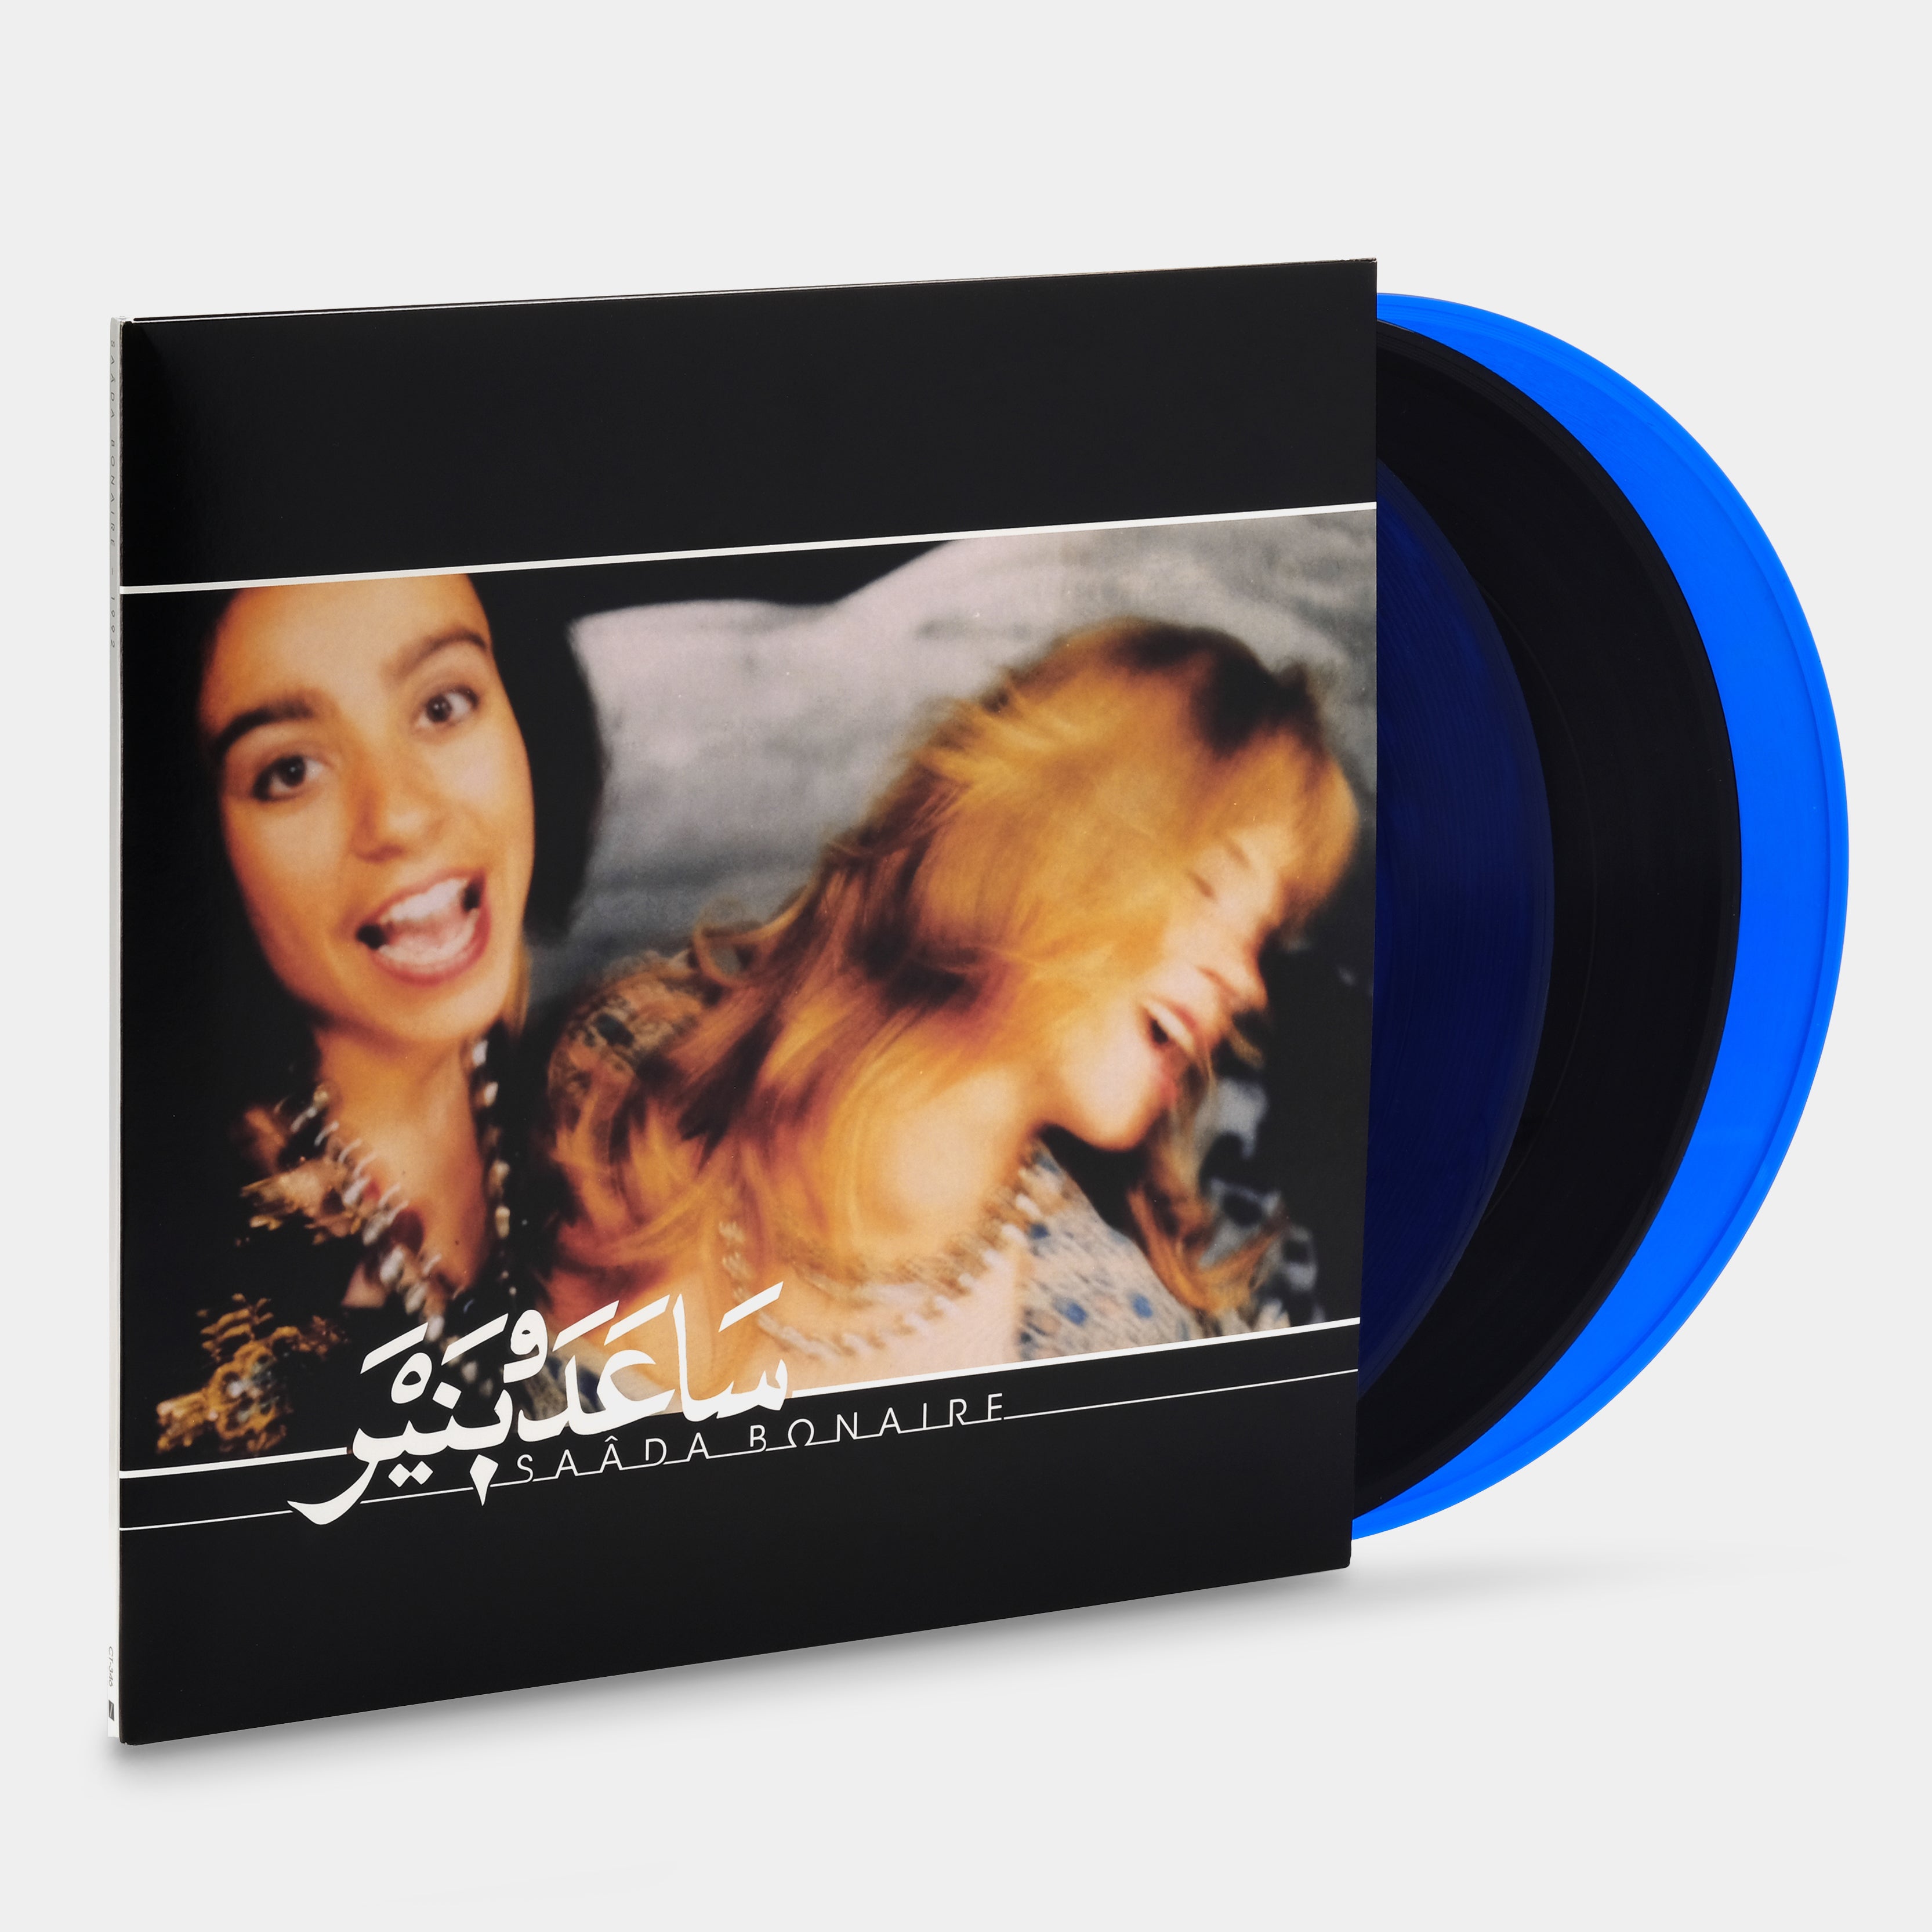 Saâda Bonaire - 1992 2xLP Translucent Sea Blue Vinyl Record + 12" Single